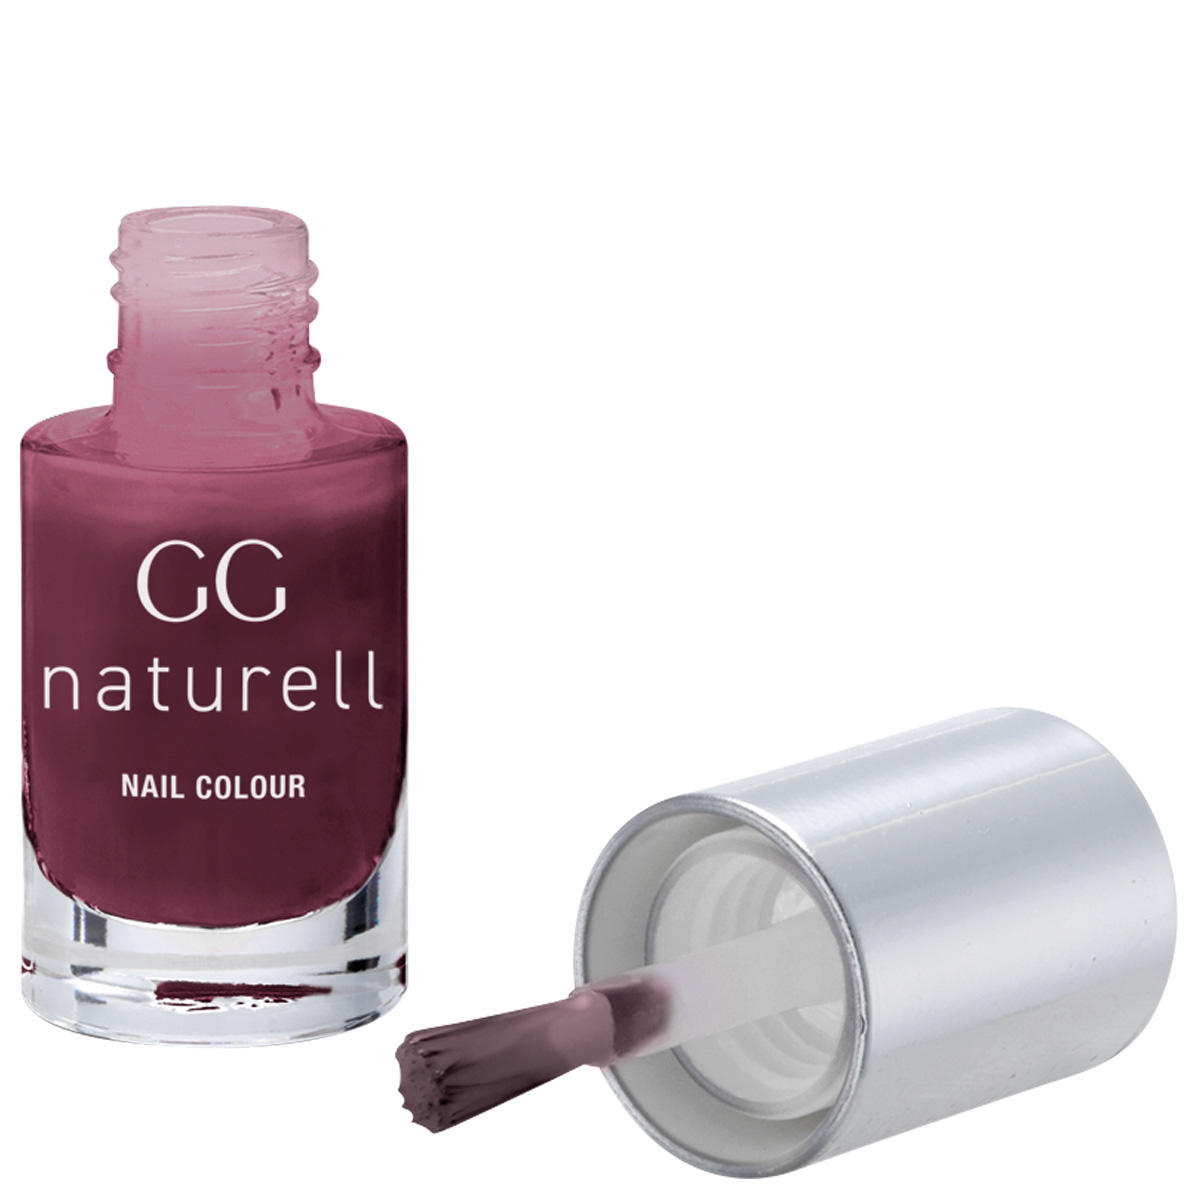 GERTRAUD GRUBER GG naturell Nail Colour 50 Bordeaux 5 ml